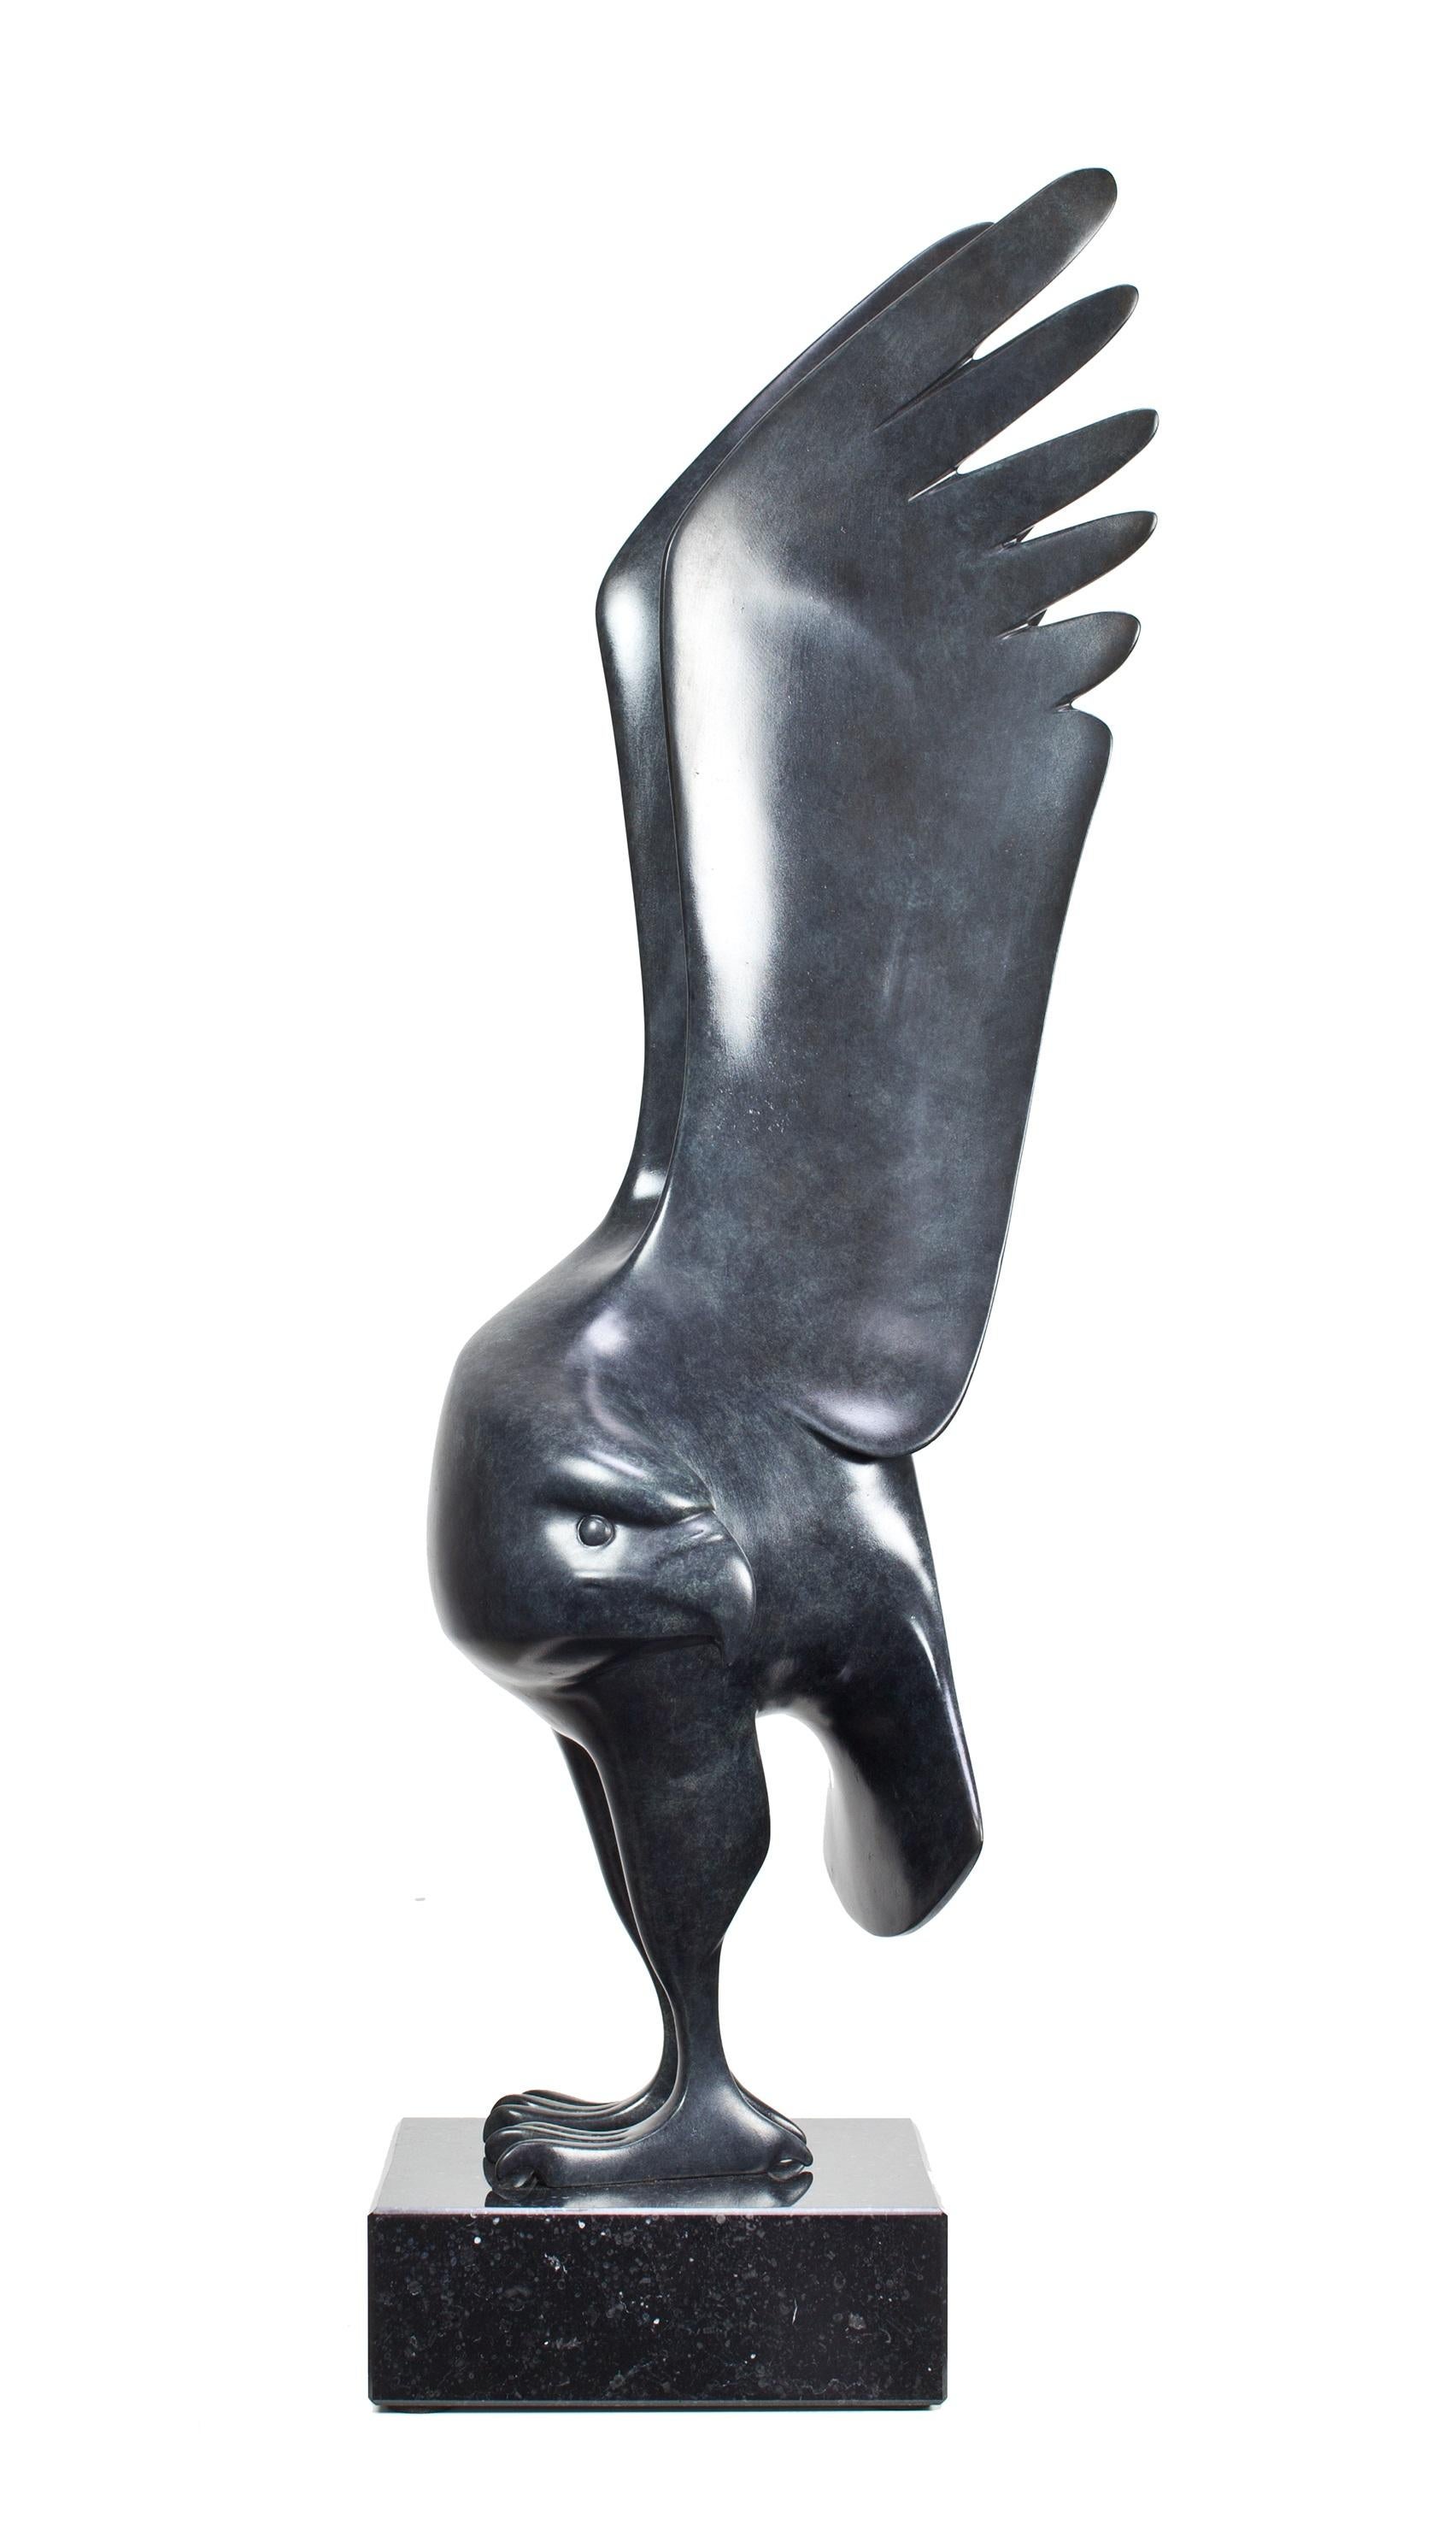 Evert den Hartog Figurative Sculpture - Roofvogel Klein Prey Bird Small Bronze Sculpture Wild Animal Limited Edition